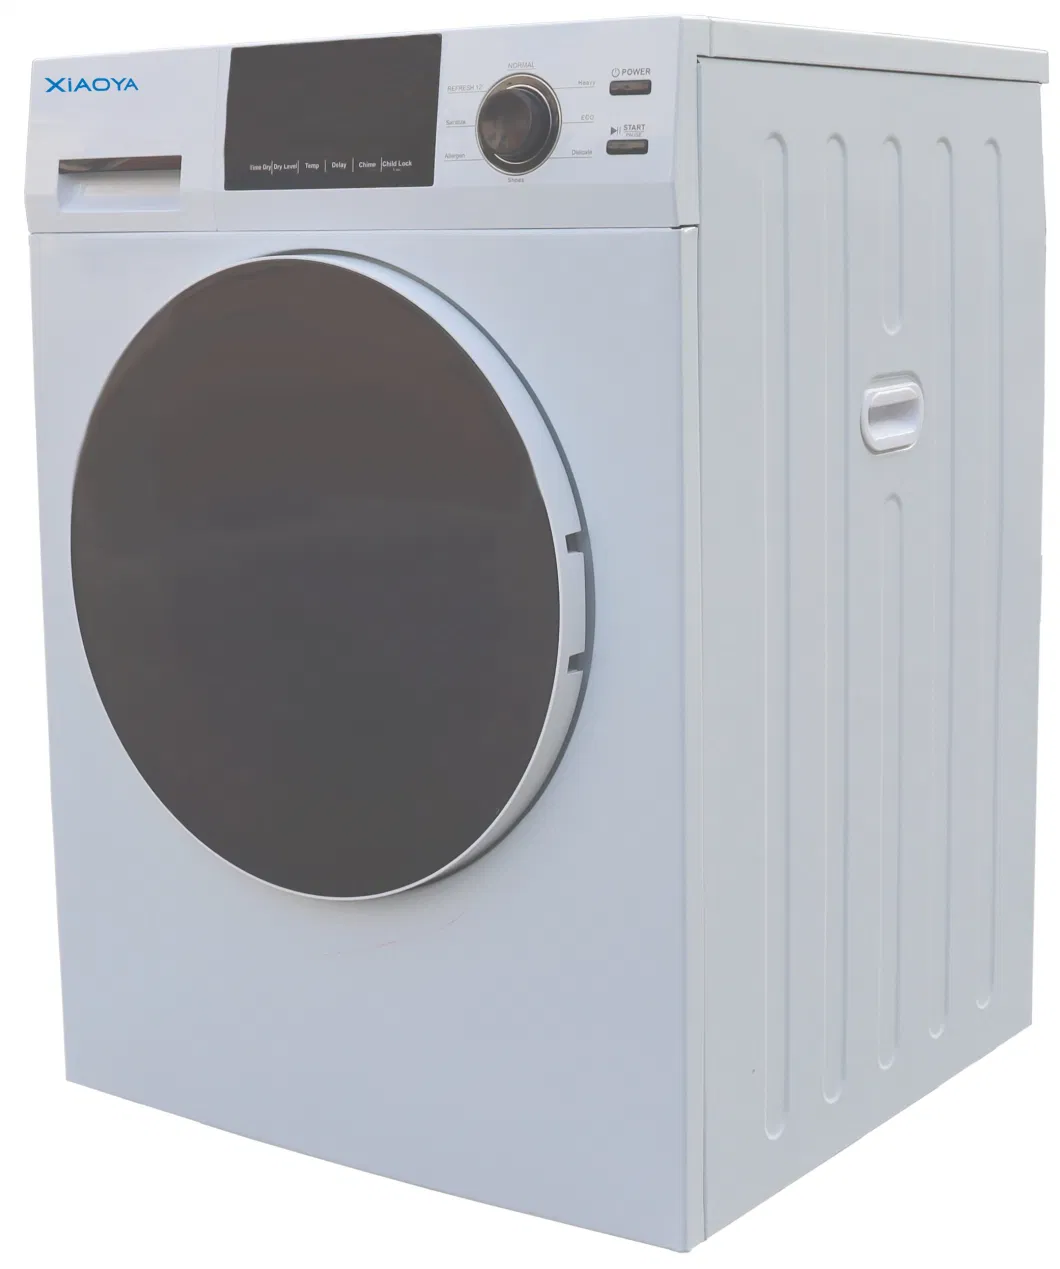 9 Kg Drum Tumble Dryer for Household